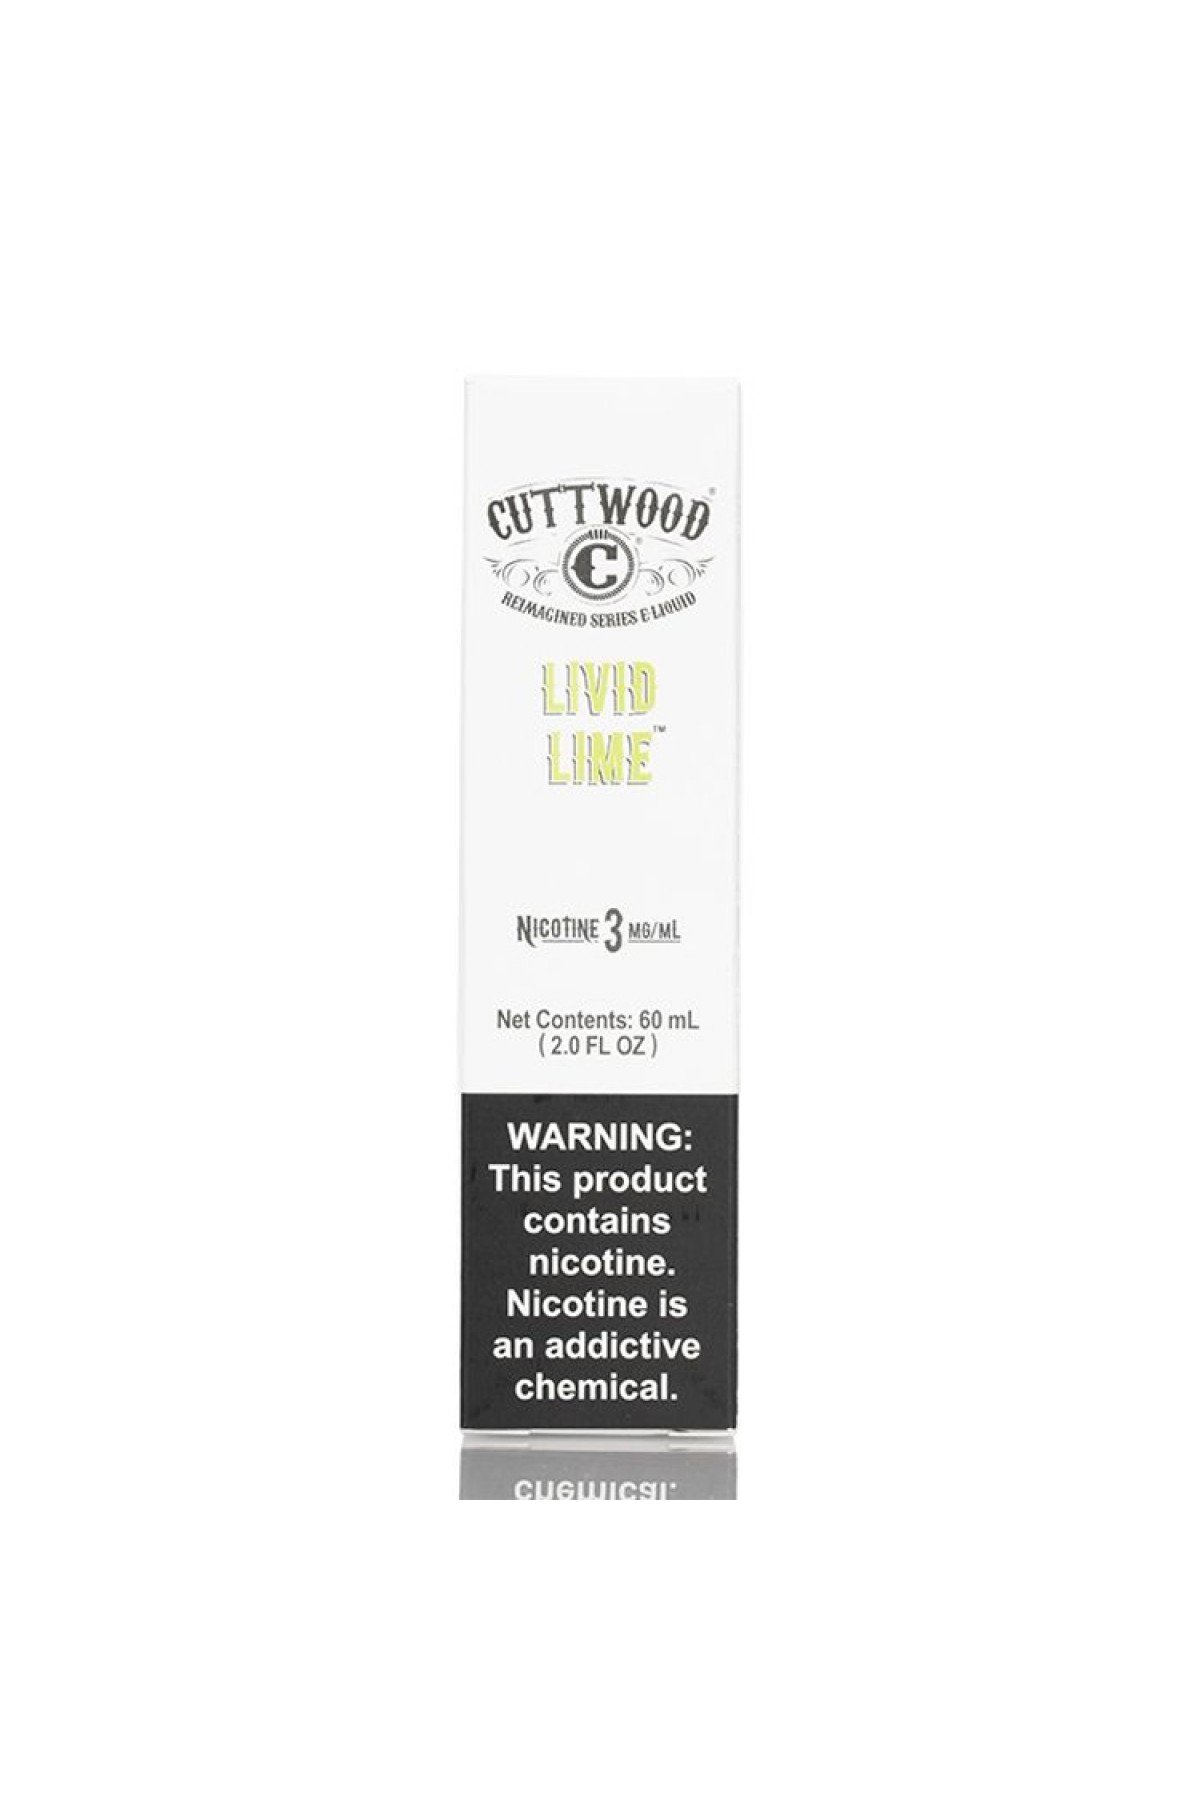 CuttWood Livid Lime 60ML Premium E-Likit